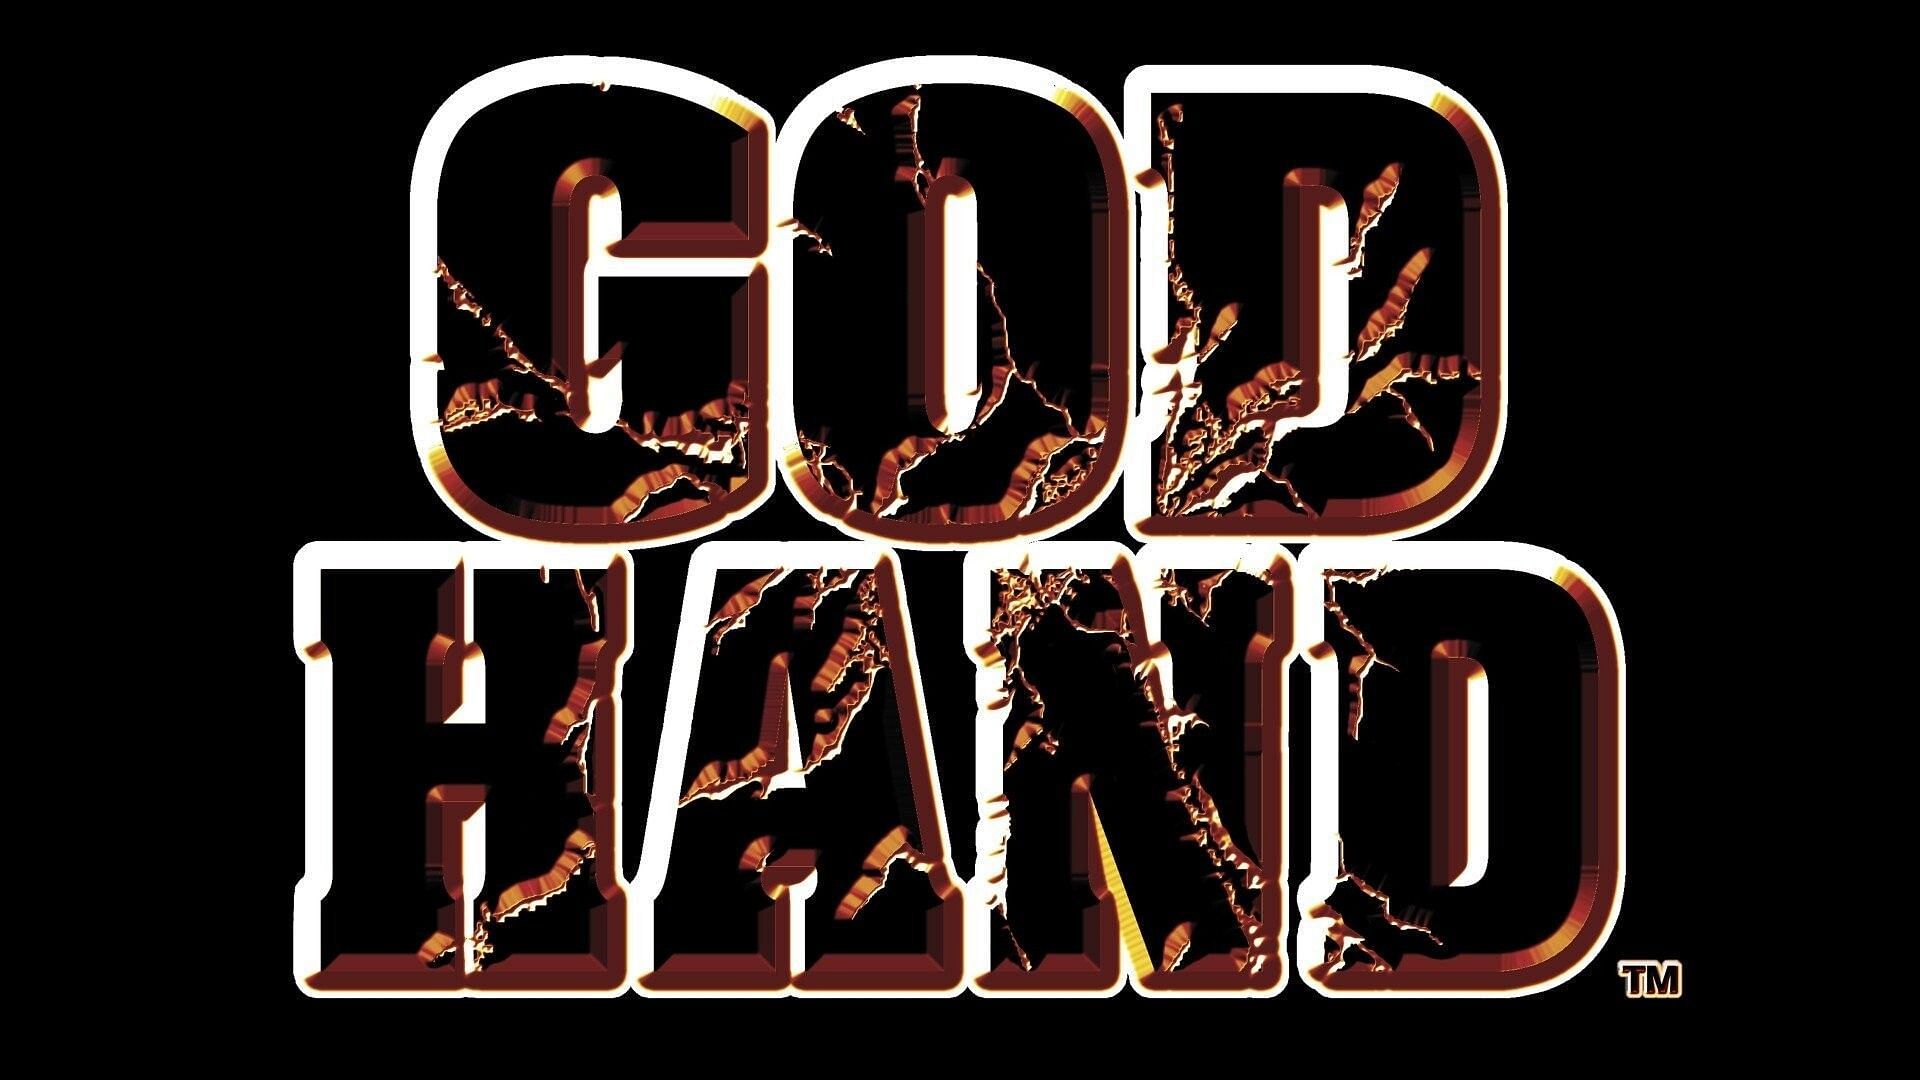 God Hand (Image via Clover Studio)